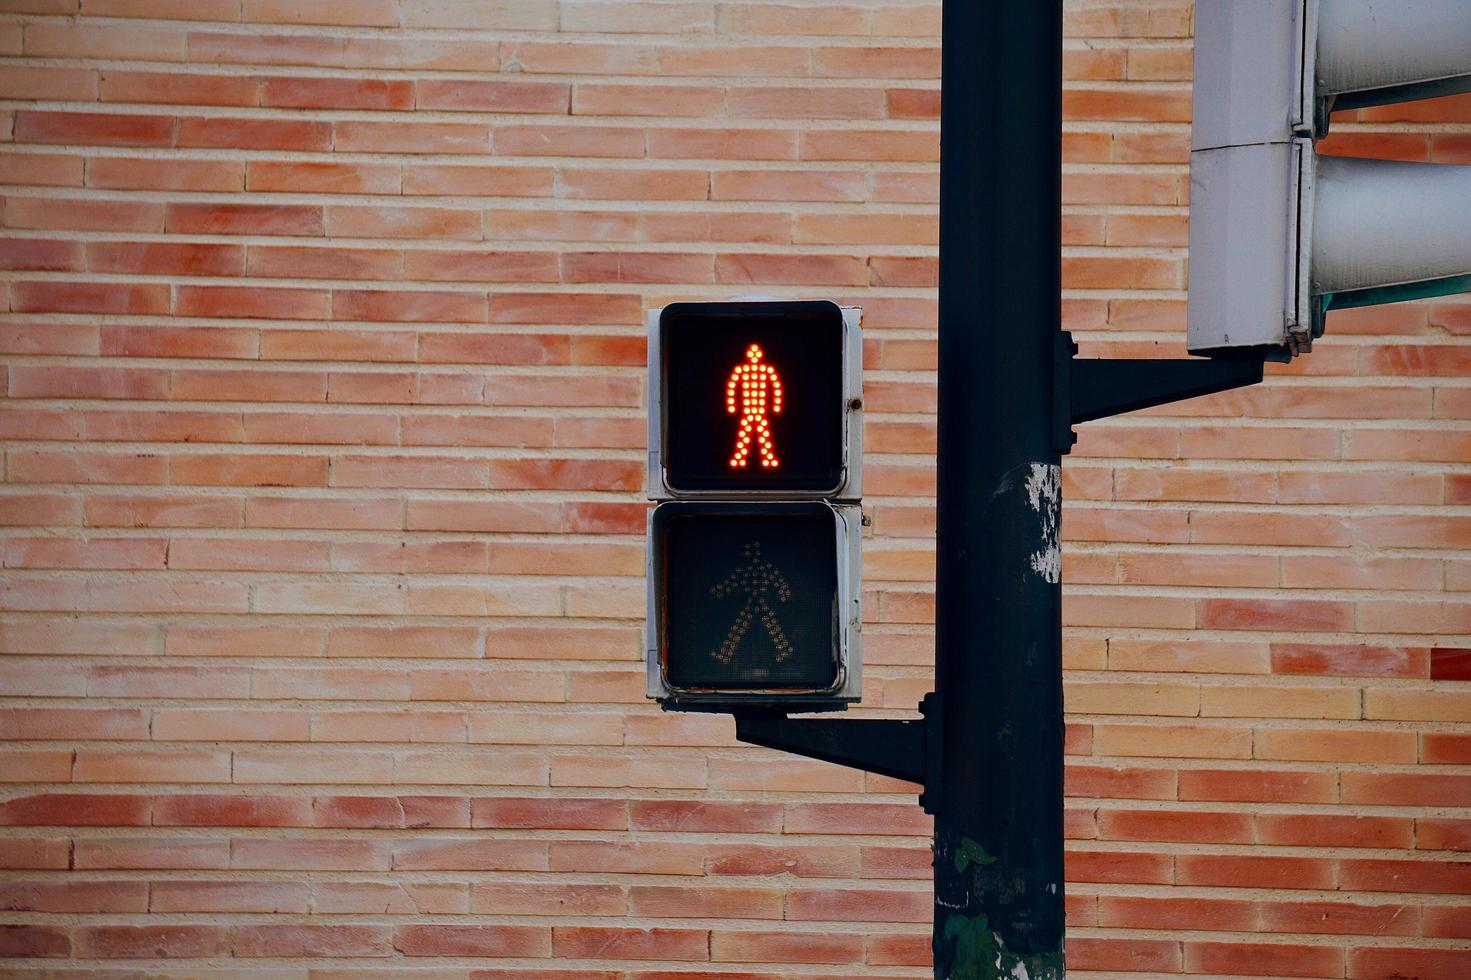 Traffic light on the street in Bilbao city, Spain photo